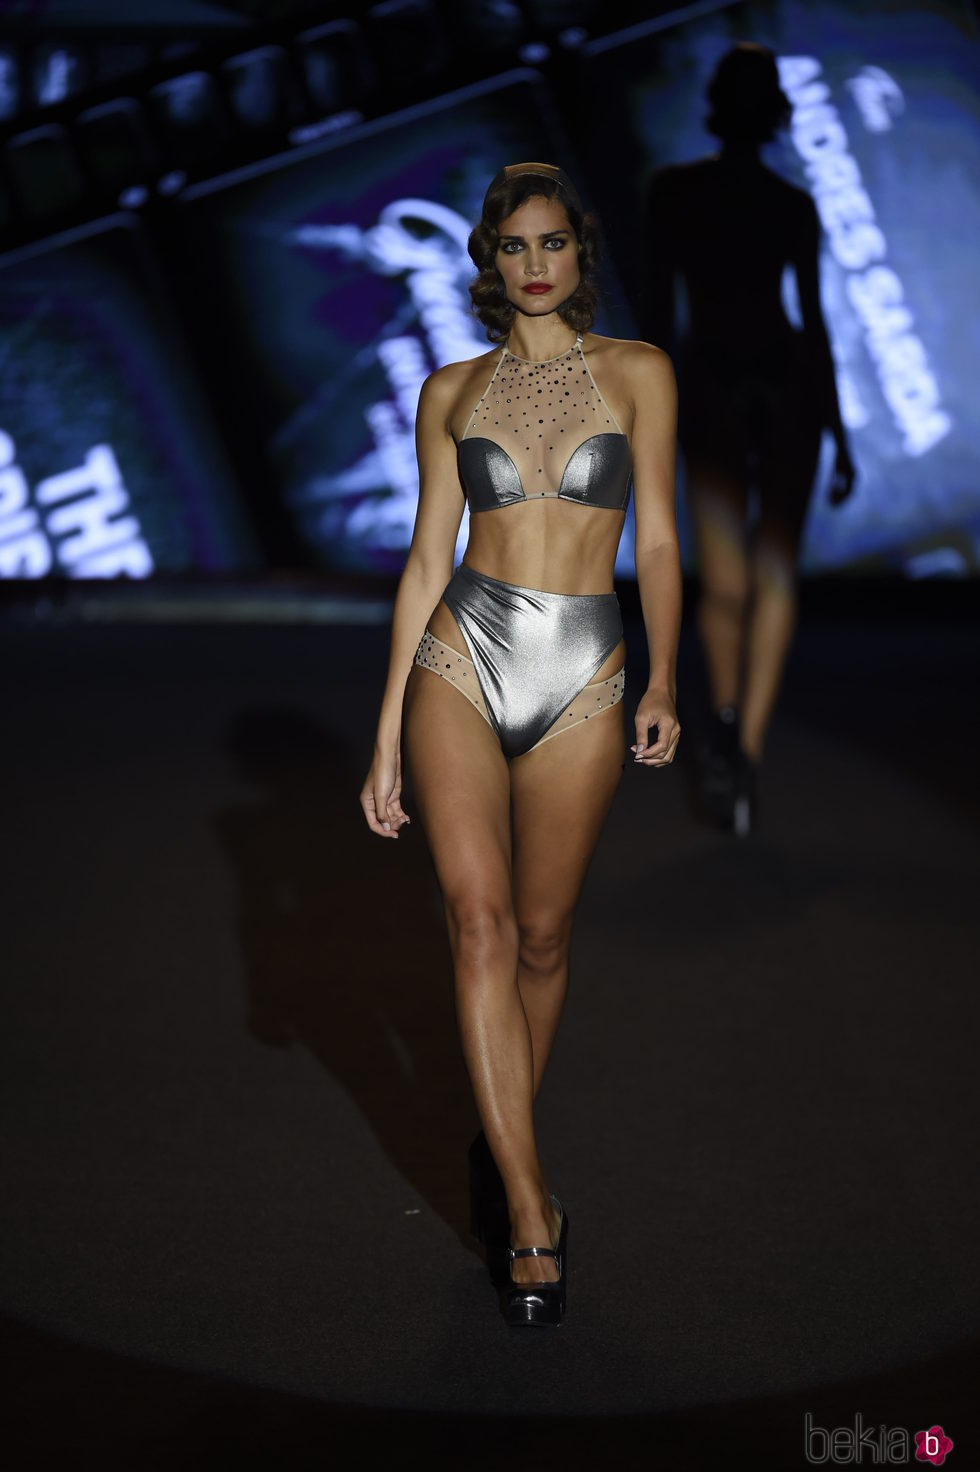 Bikini metalizado de Andrés Sardá primavera/verano 2018 en la Madrid Fashion Week